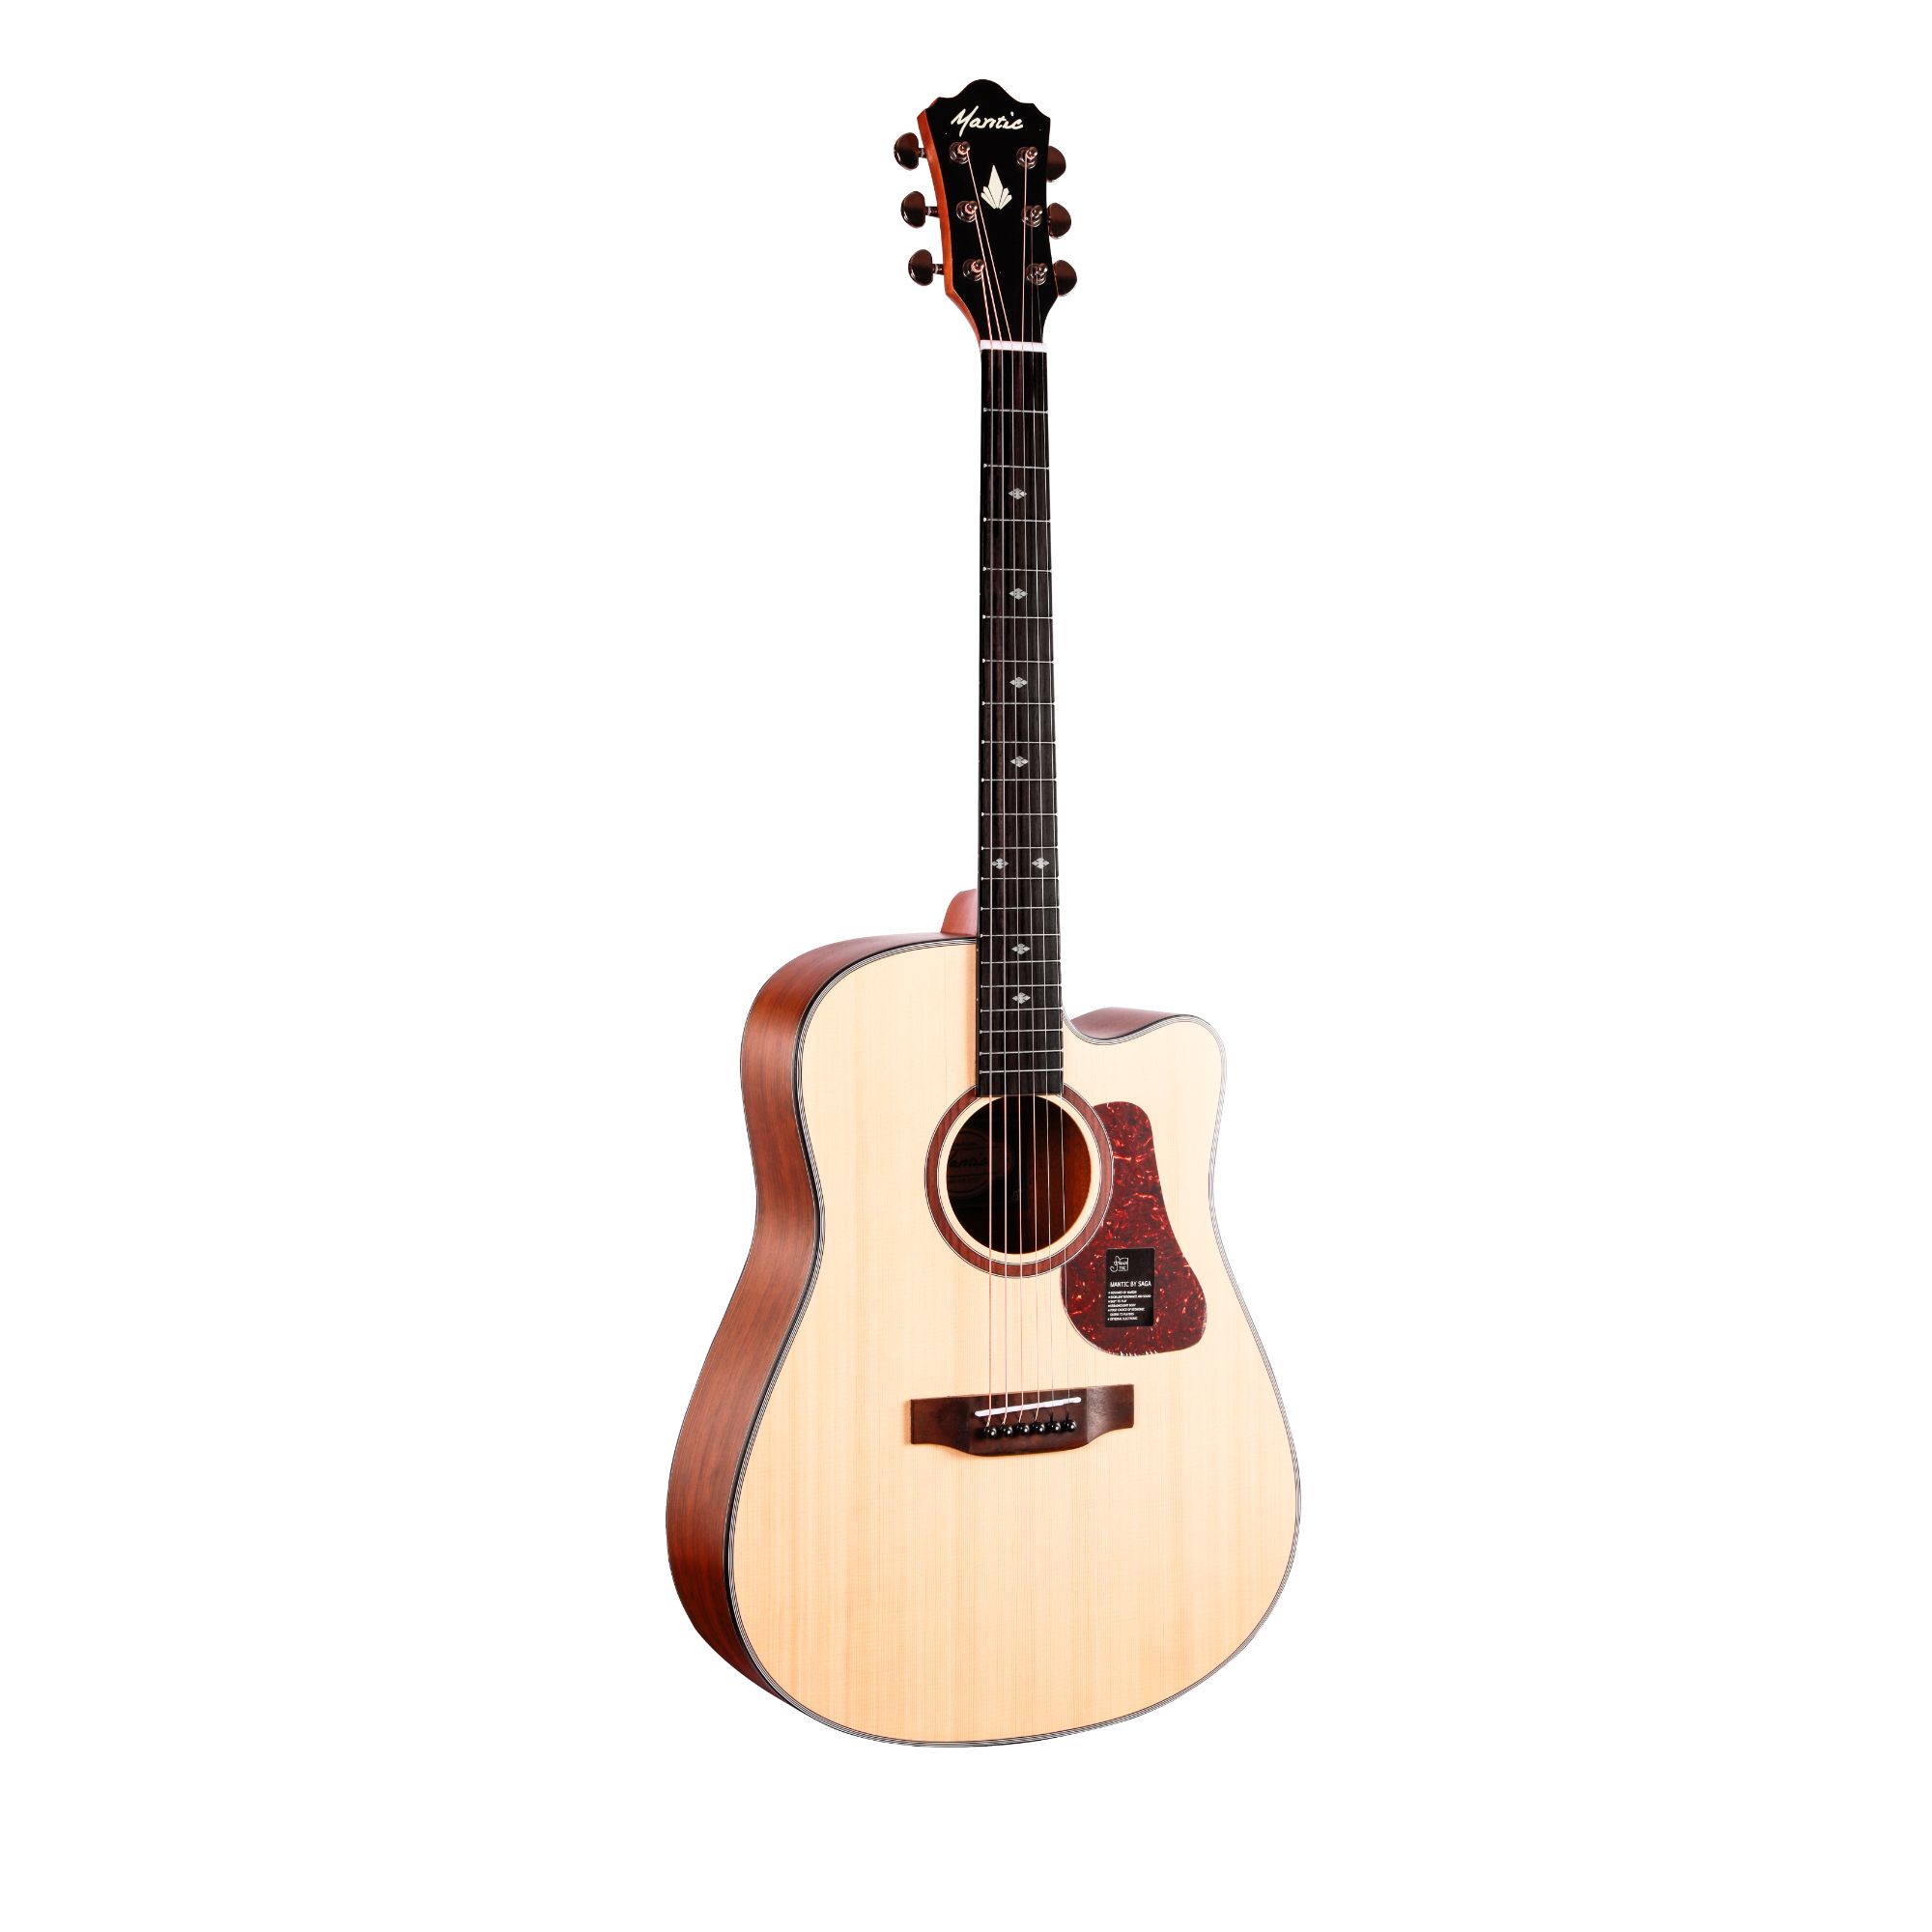 Mantic ag370c acoustic Guitar online price in india